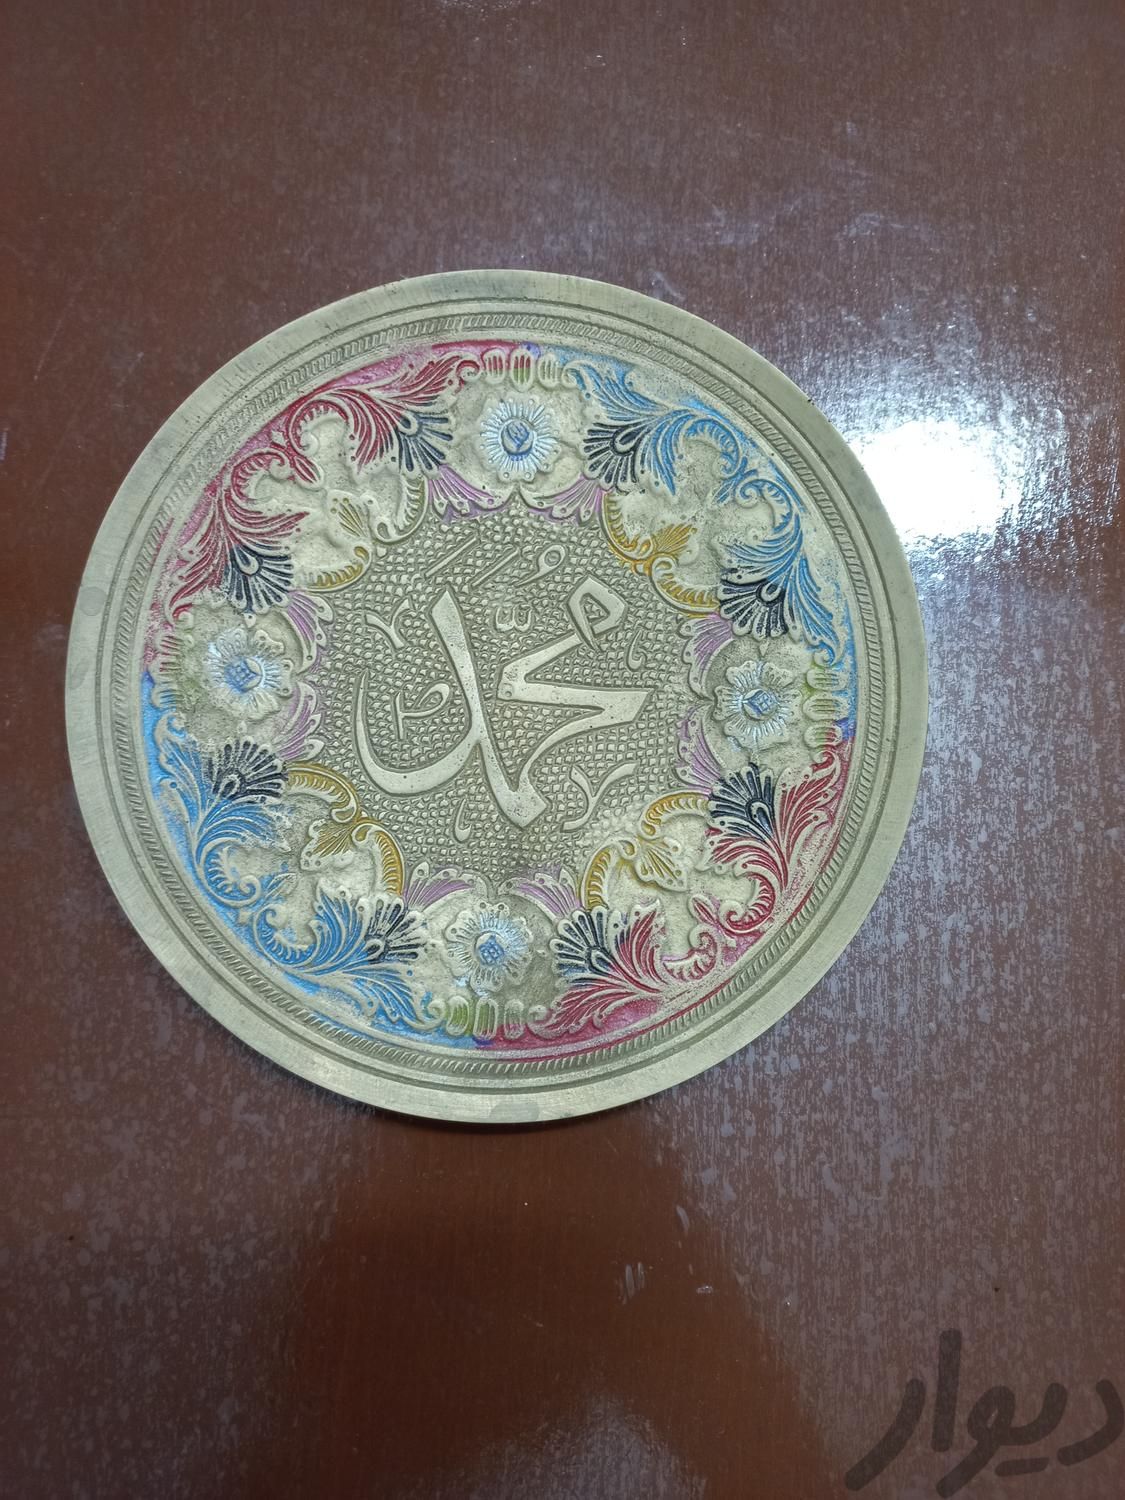 دکوری برنجی دیوارکوب|صنایع دستی و سایر لوازم تزئینی|تهران, عبدل‌آباد|دیوار